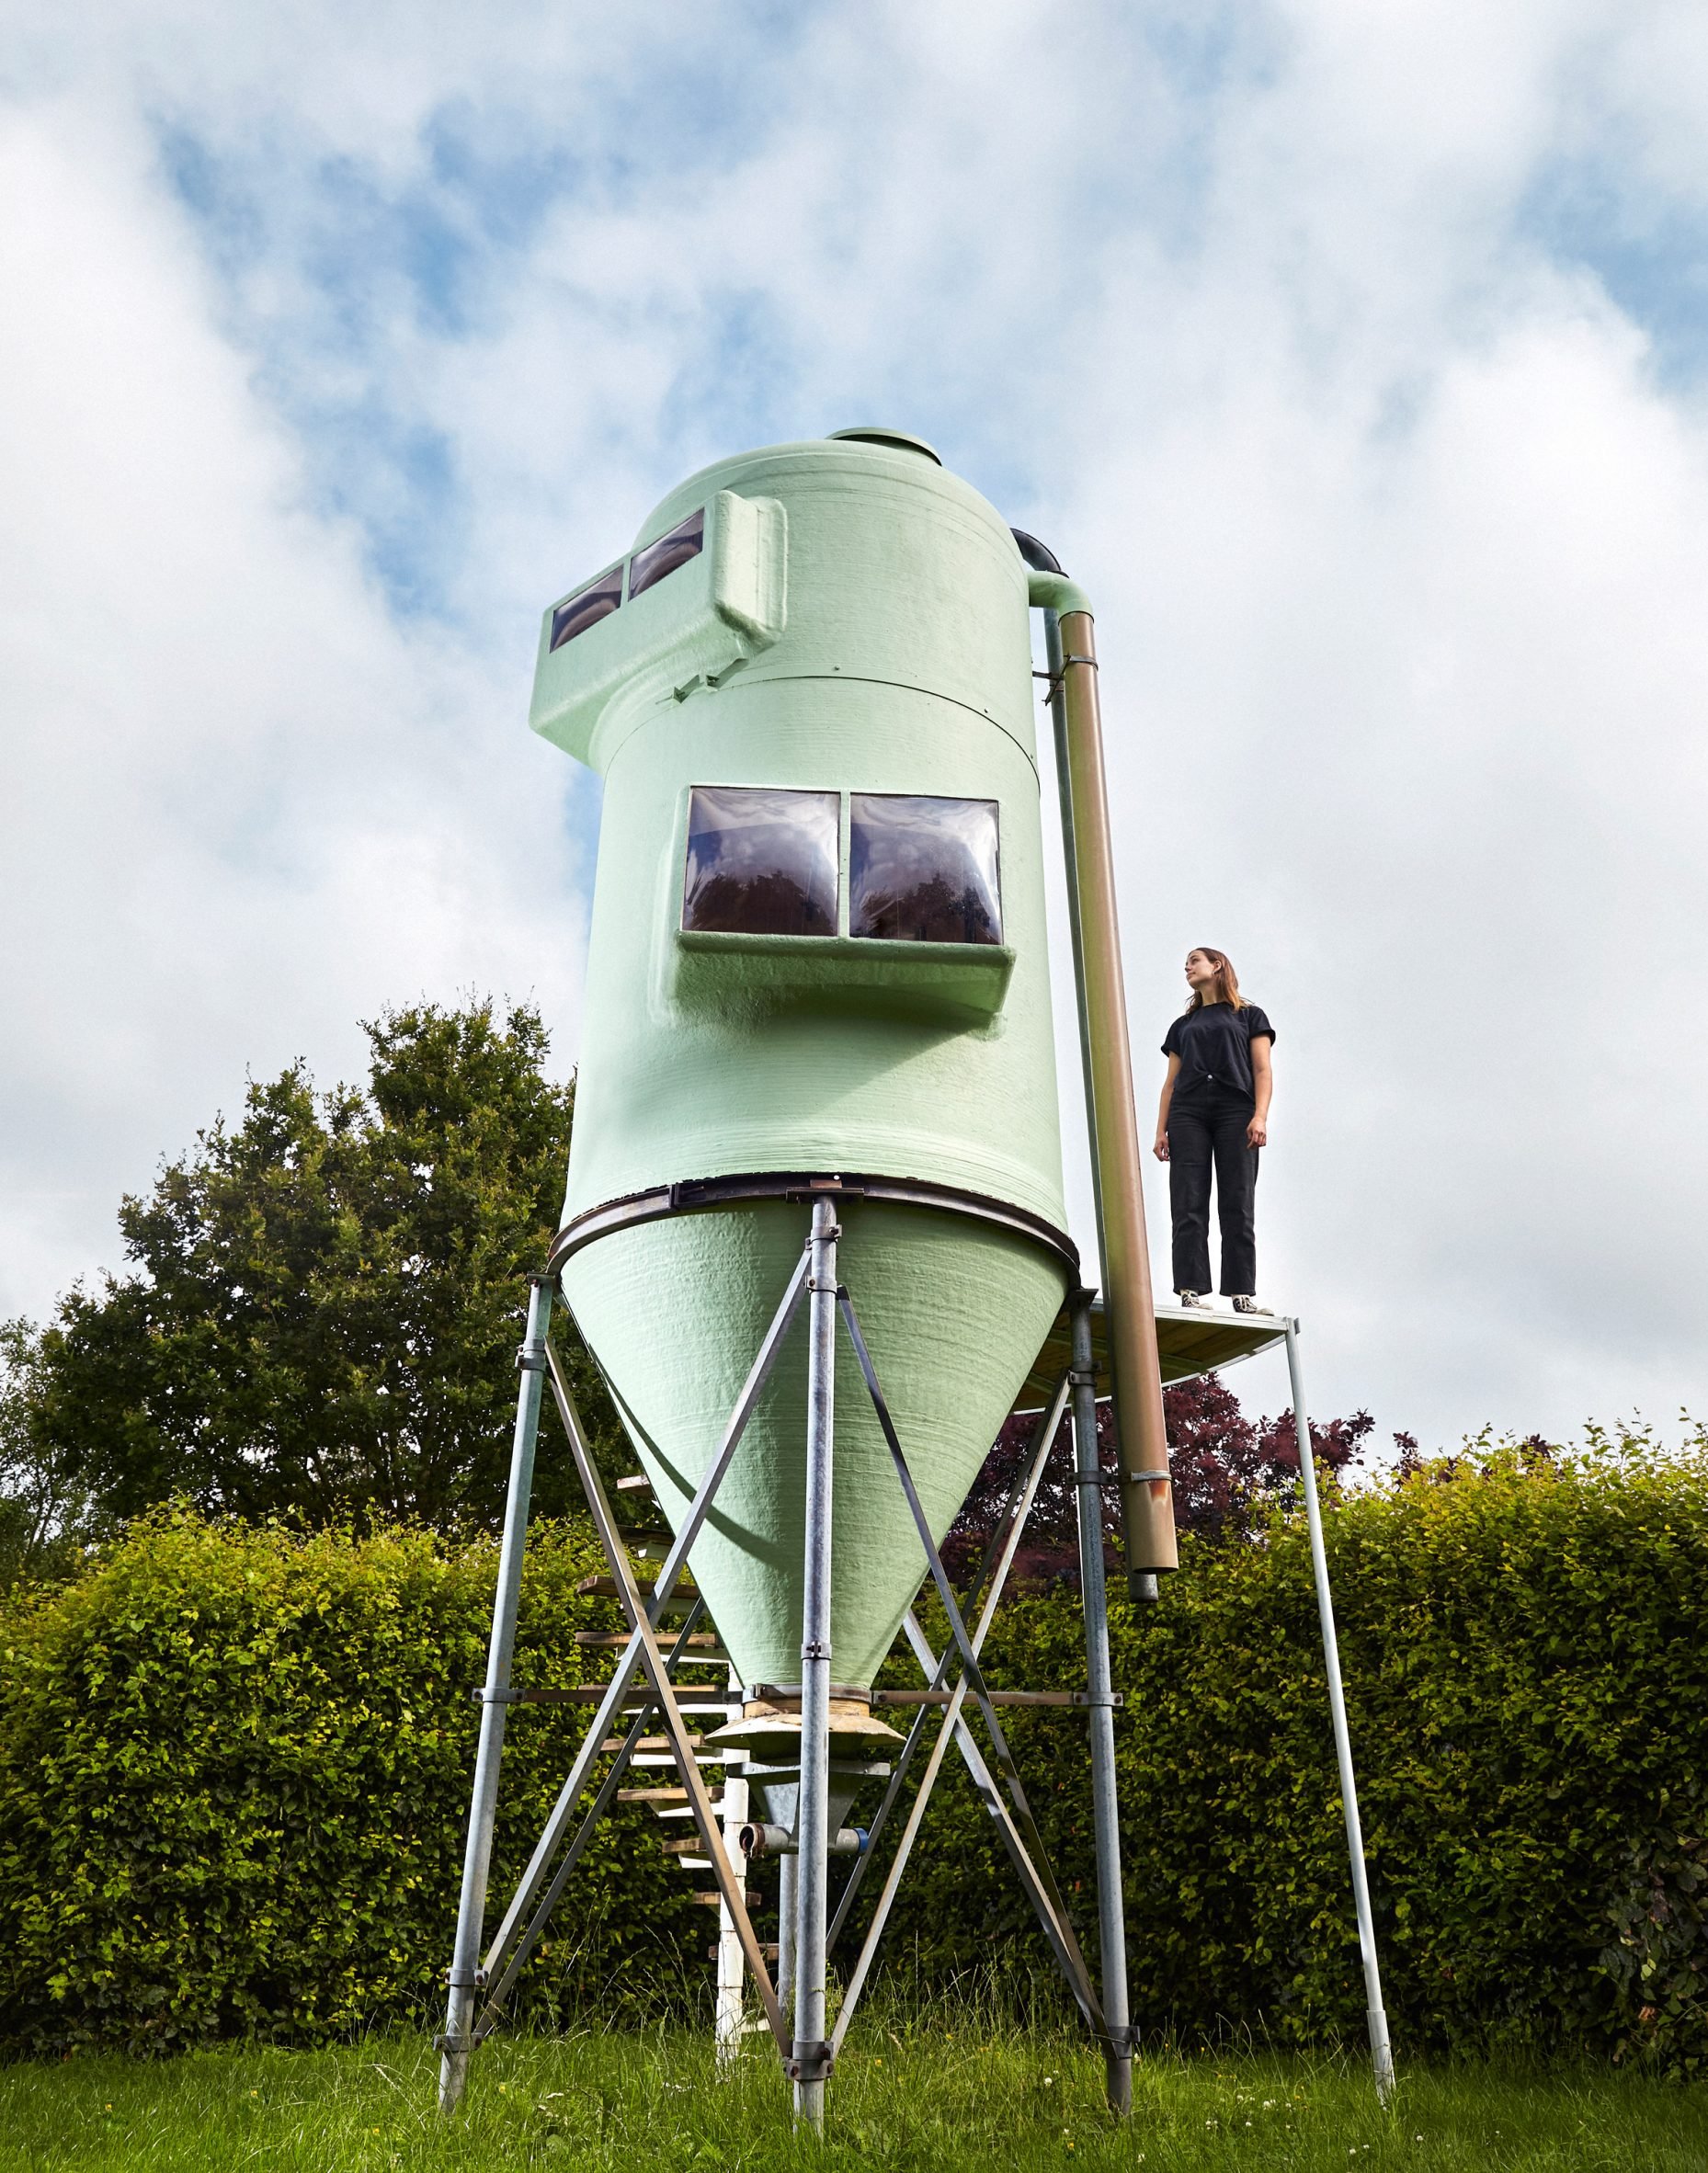 Stella van Beers converts old grain silo into micro home